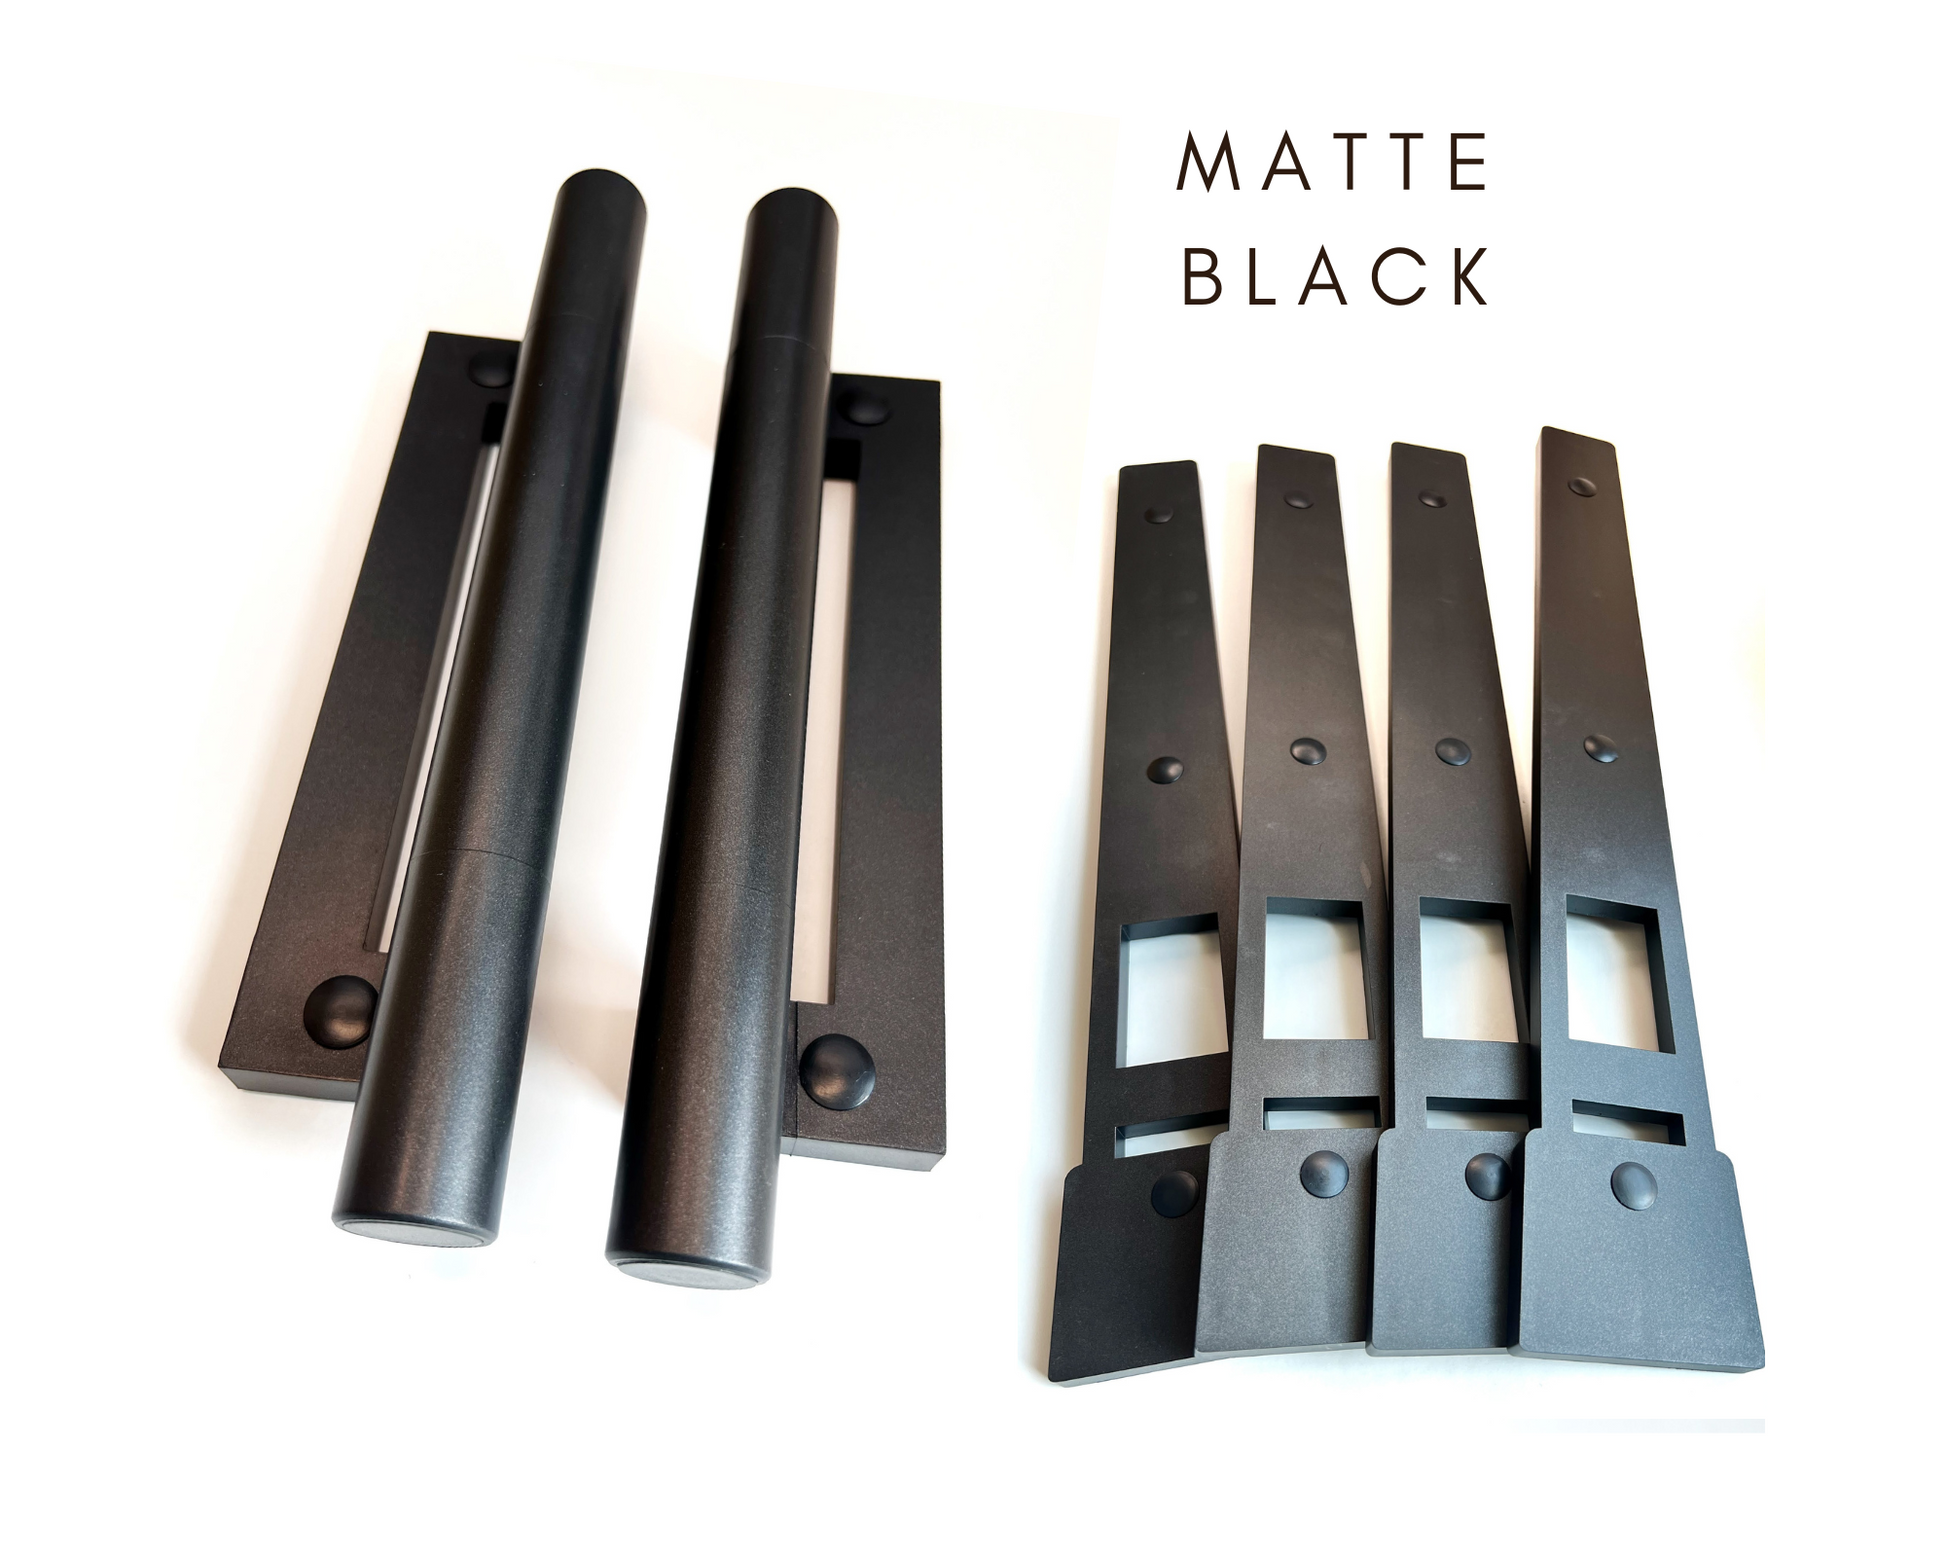 Decorative Magnetic Garage Door Hardware Handles - Matte Black Glamour Accents